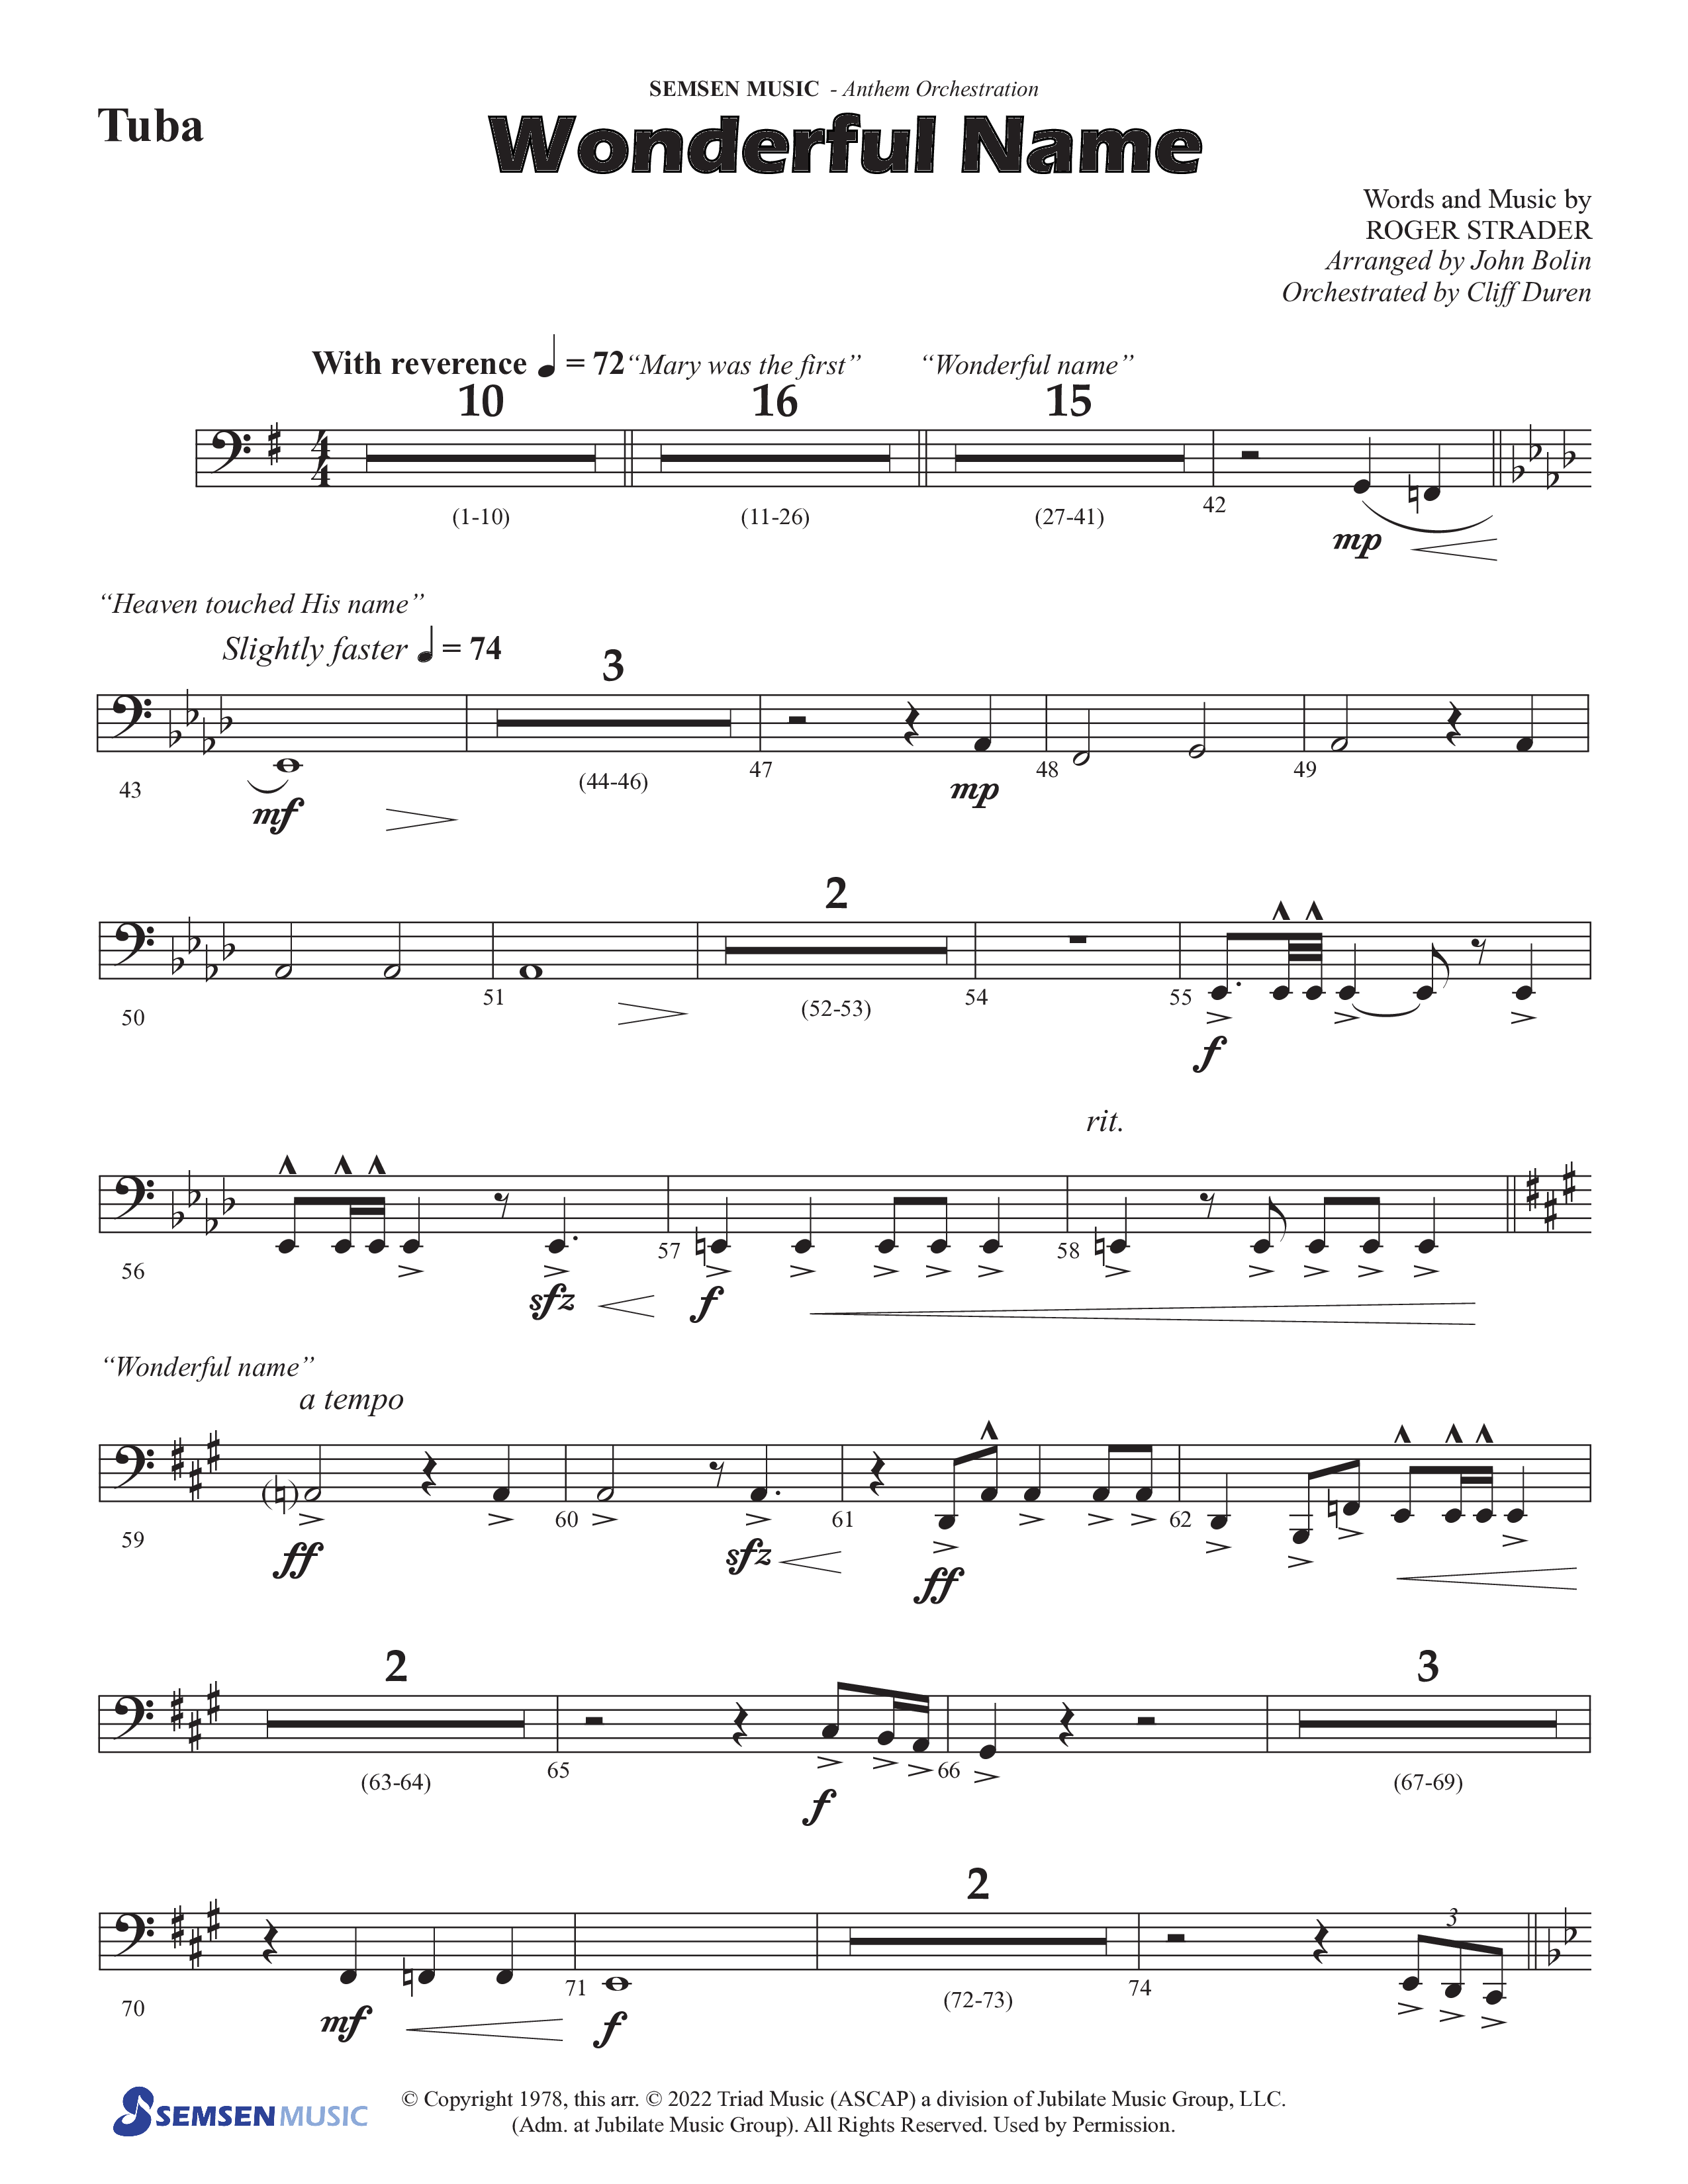 Wonderful Name (Choral Anthem SATB) Tuba (Semsen Music / Arr. John Bolin / Orch. Cliff Duren)